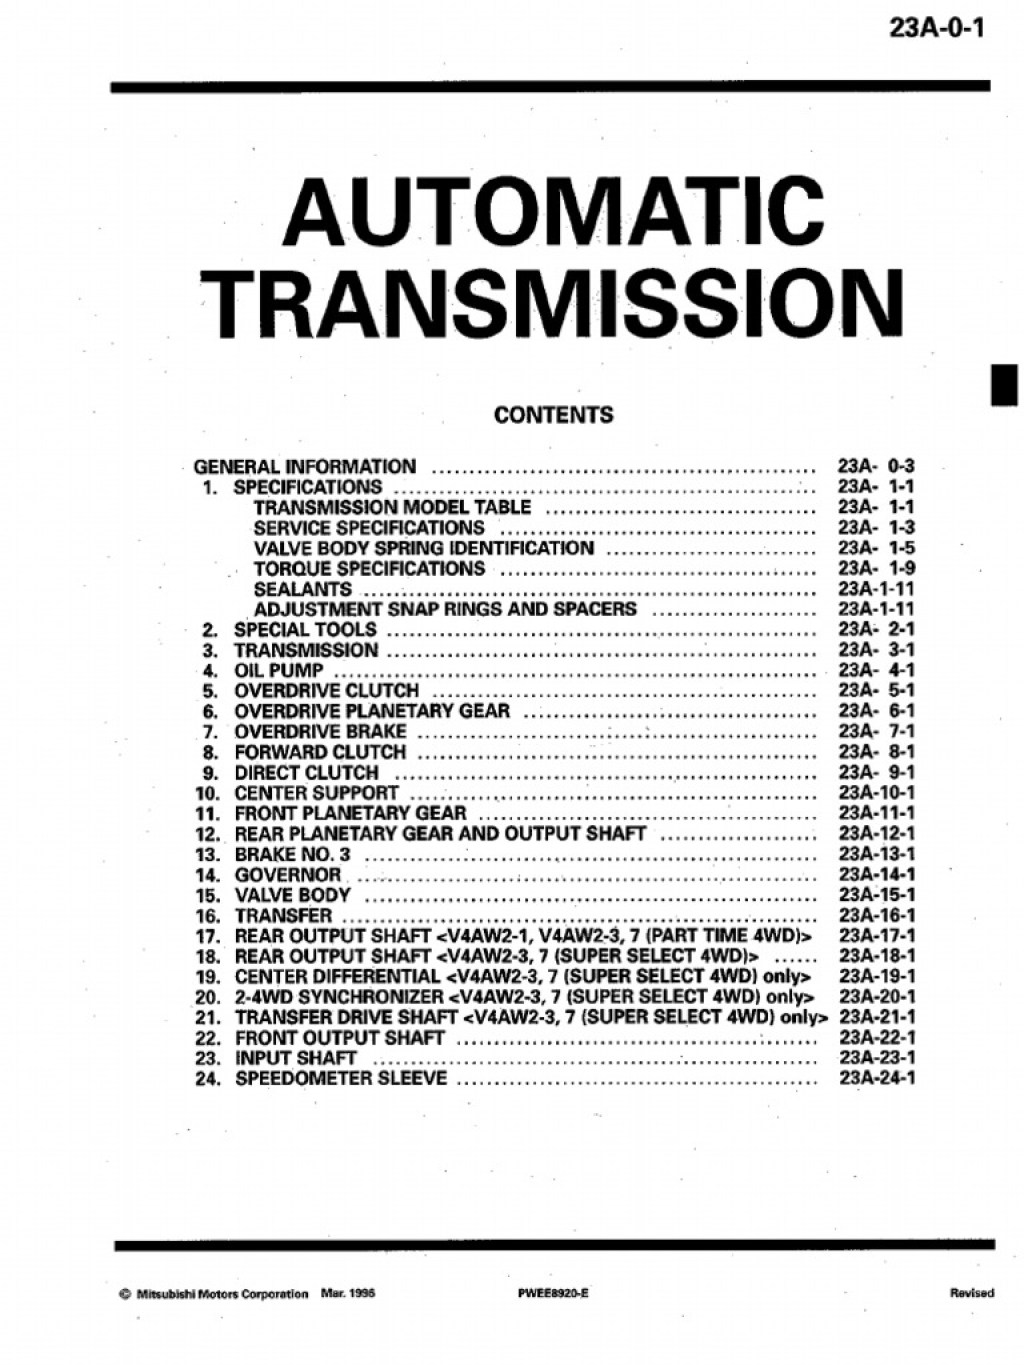 suzuki sidekick service manual pdf - Service Manuals,Technical info and Parts sourcing  Suzuki Forums